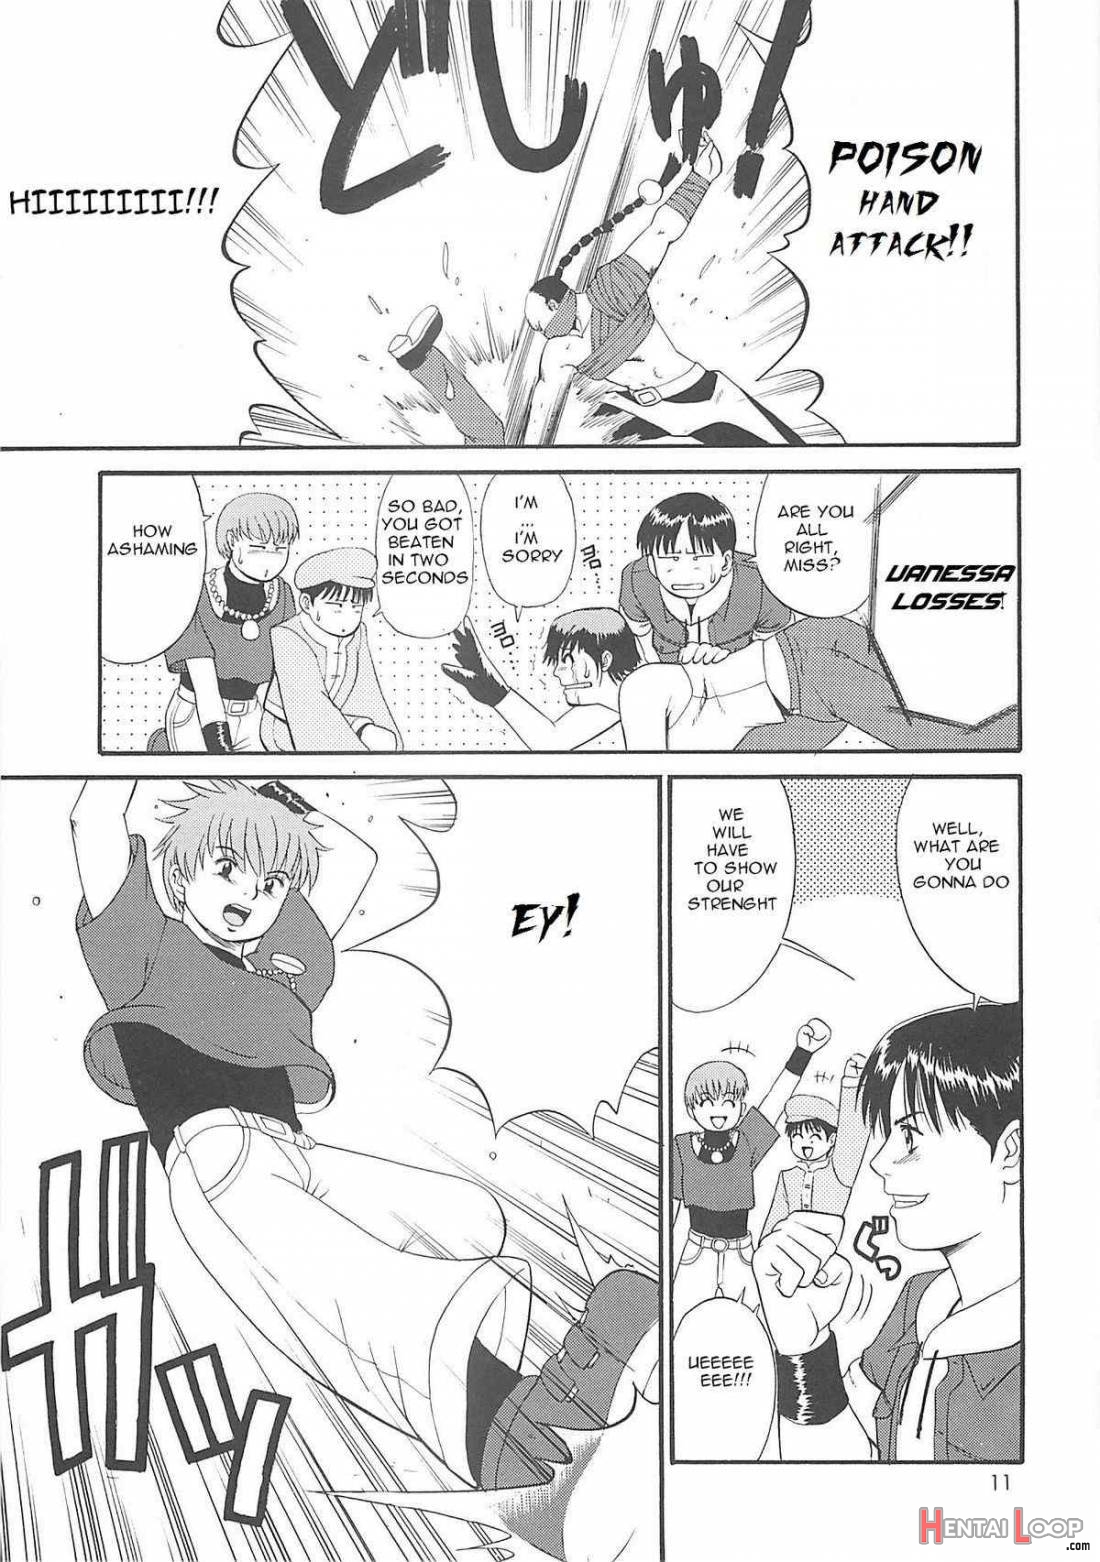 The Yuri&Friends 2000 page 11